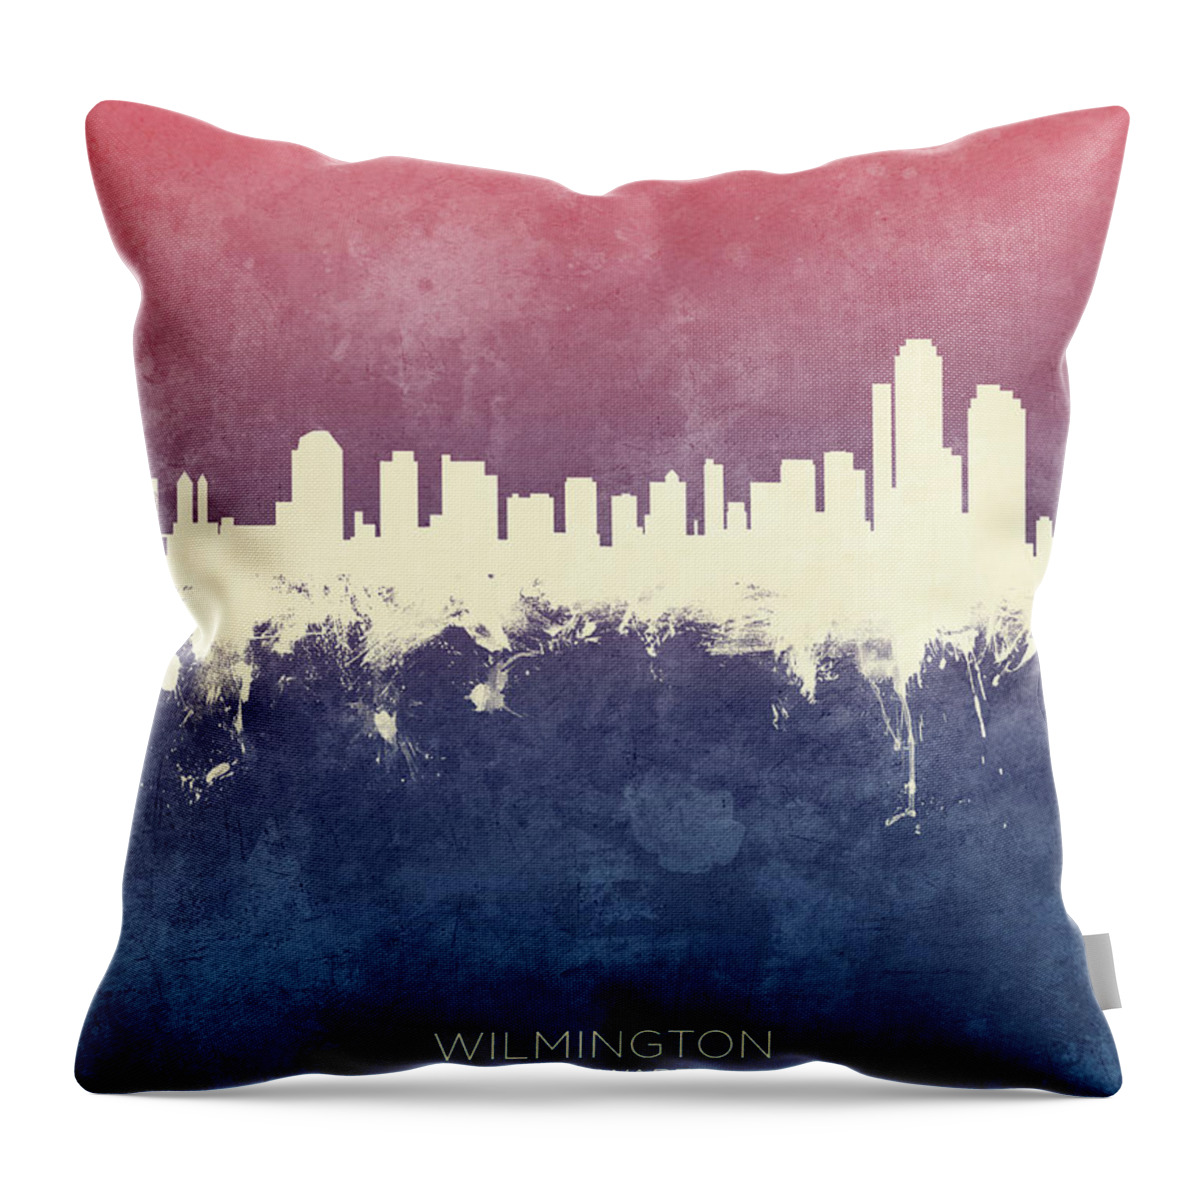 Wilmington Throw Pillow featuring the digital art Wilmington Delaware Skyline #30 by Michael Tompsett